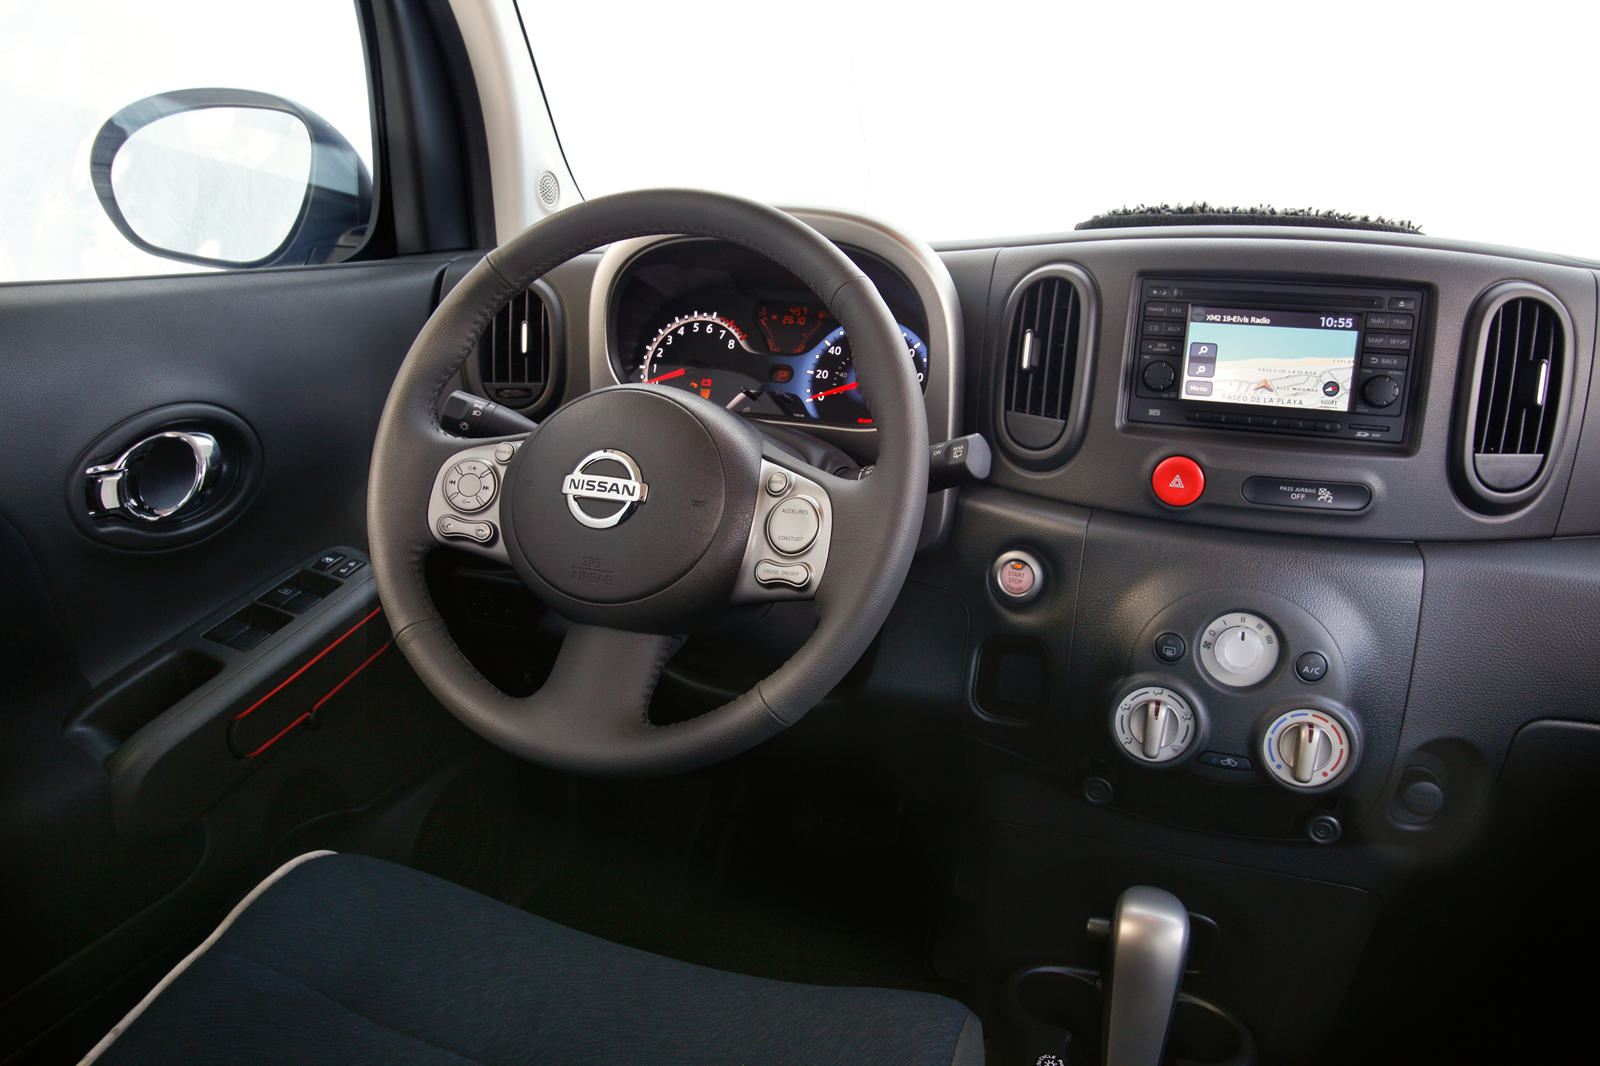 Nissan Cube interior - Cockpit